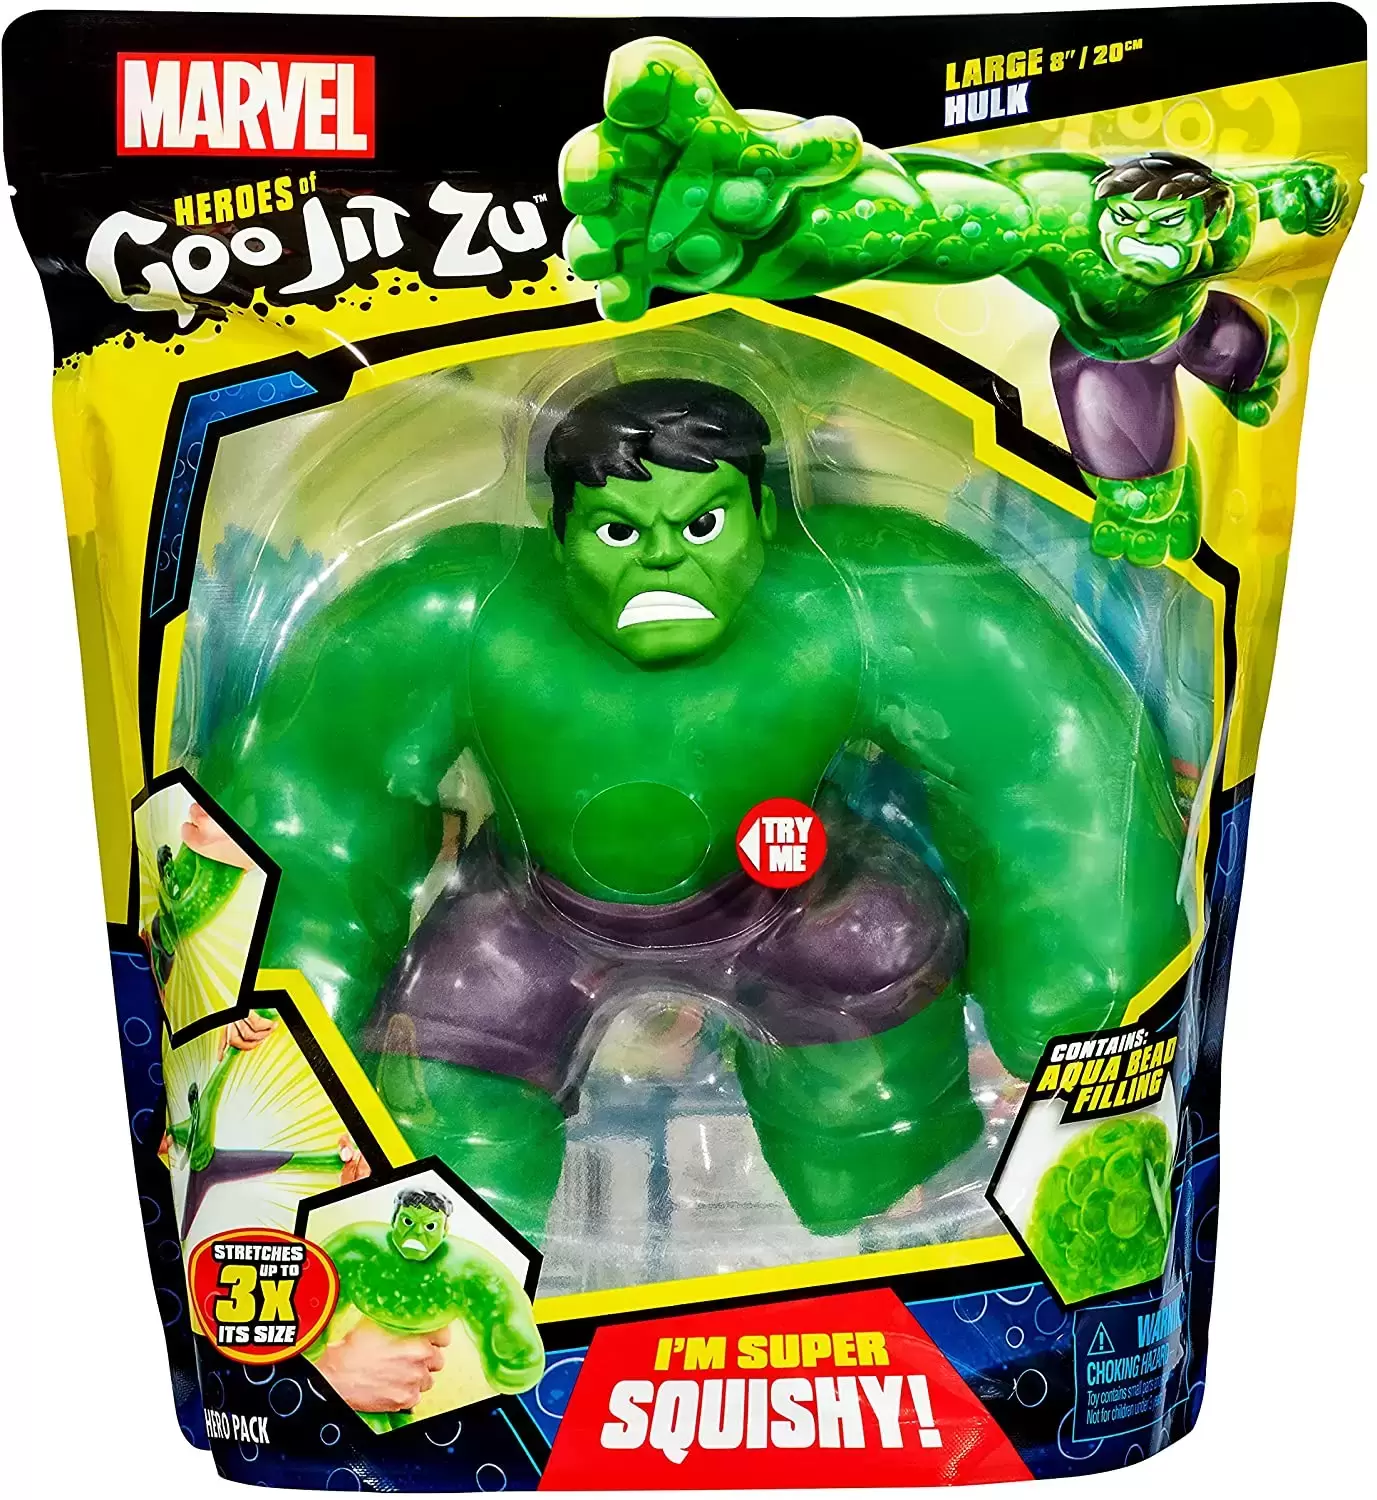 Heroes of Goo Jit Zu - Marvel - Large Hulk